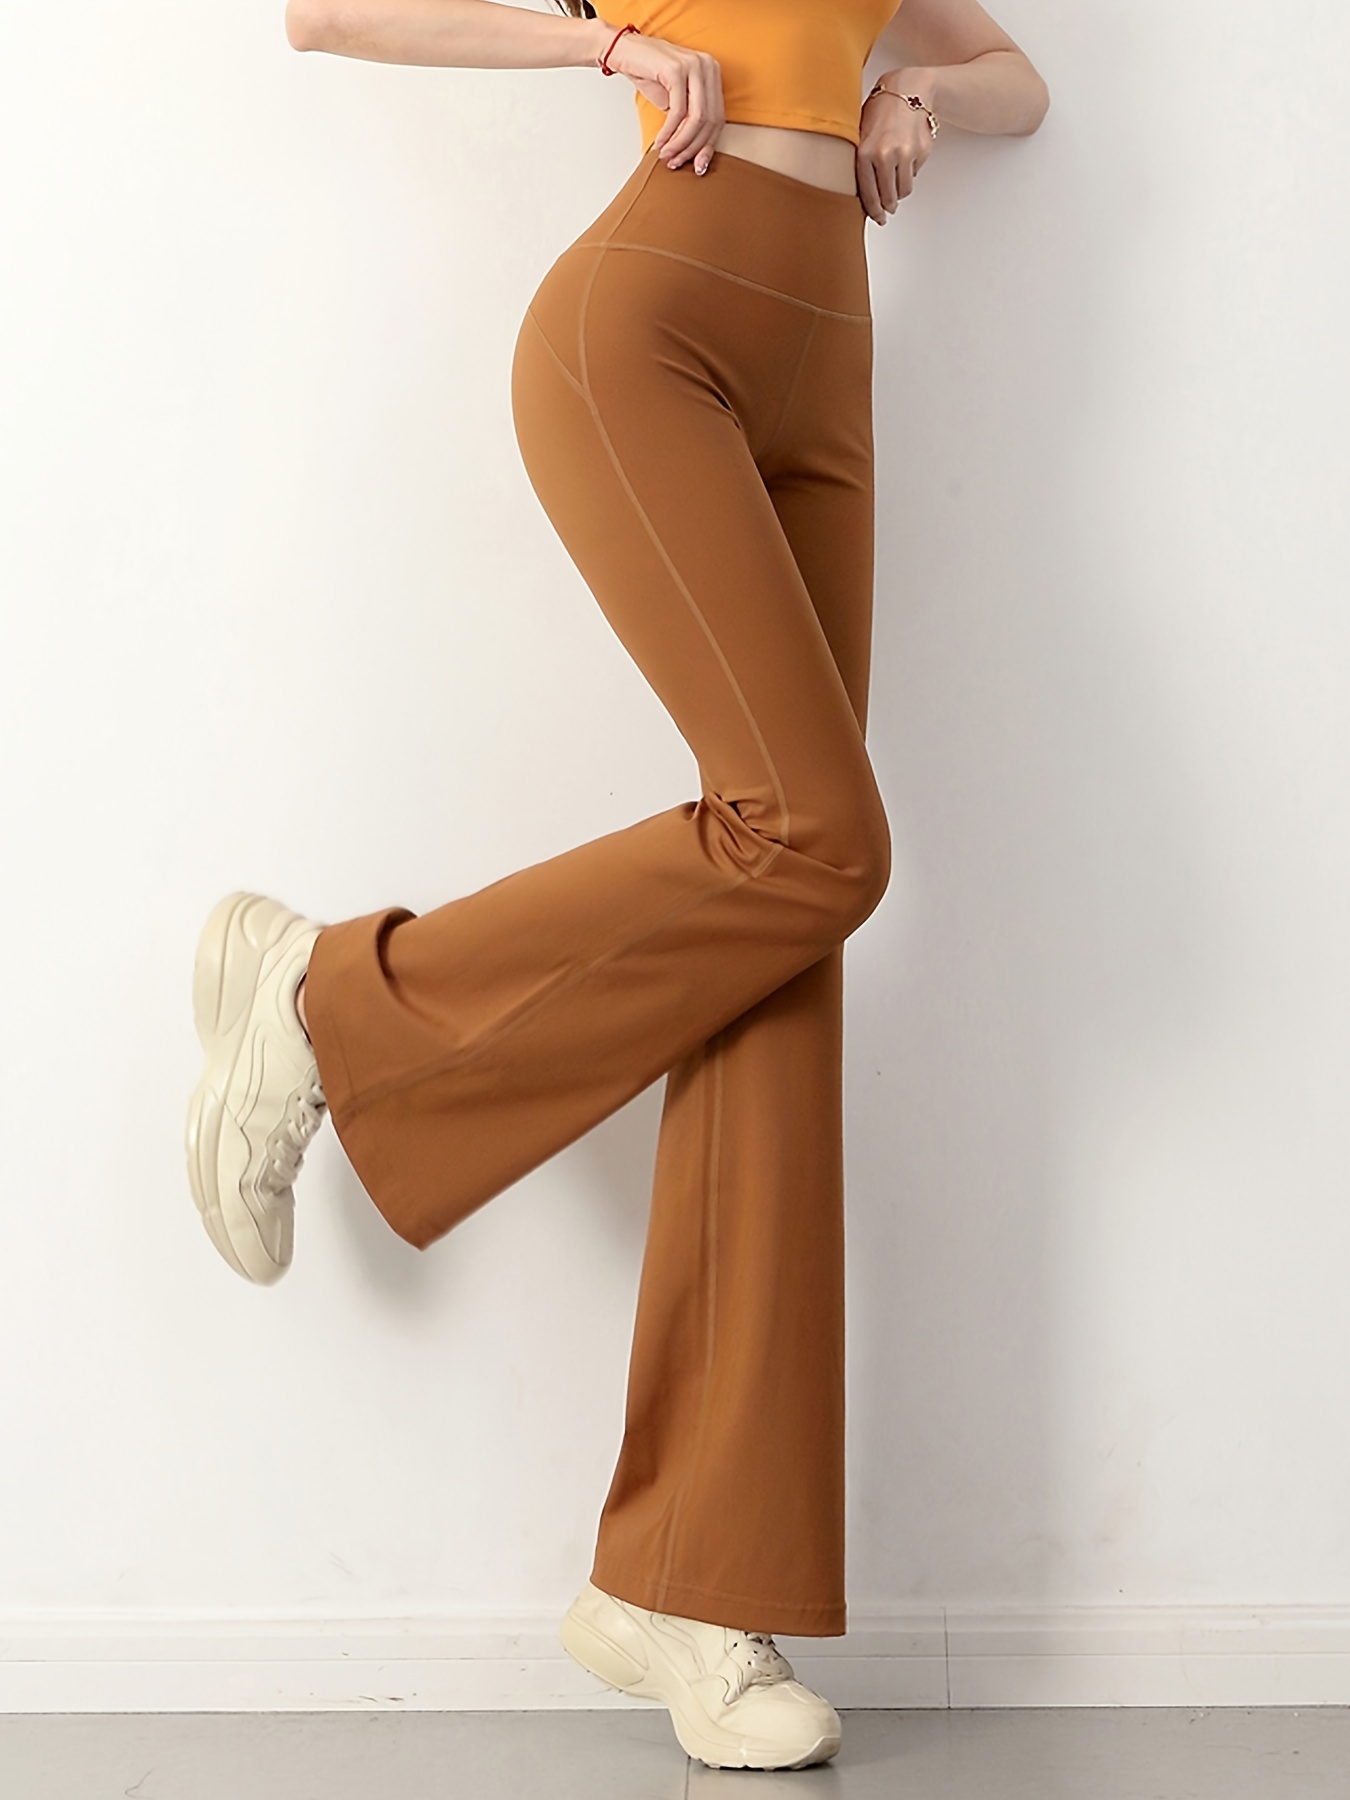 GuoChe Tan Brown High Waisted Yoga Pants for Women Sport